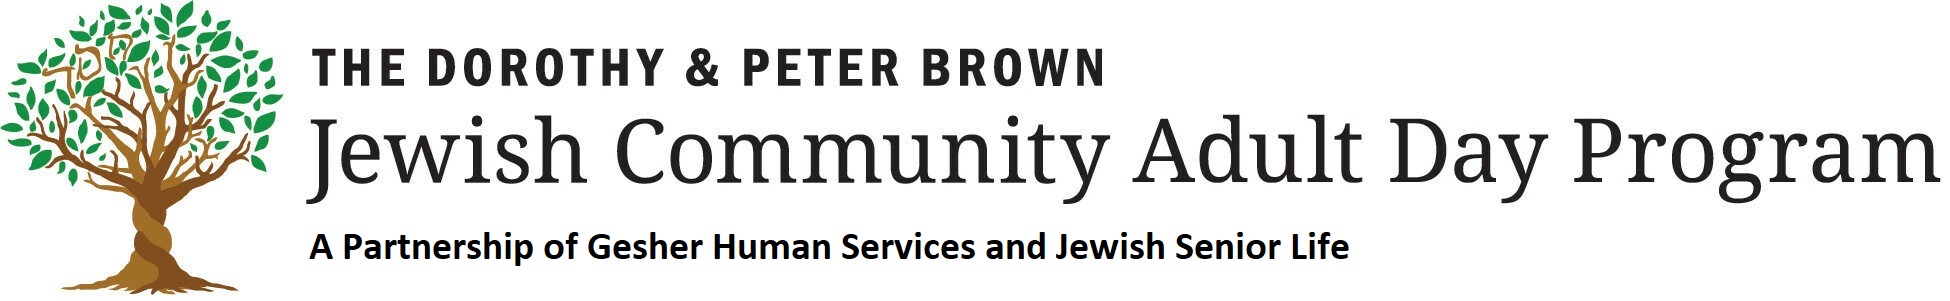 Jewish Community Adult Day Program Logo